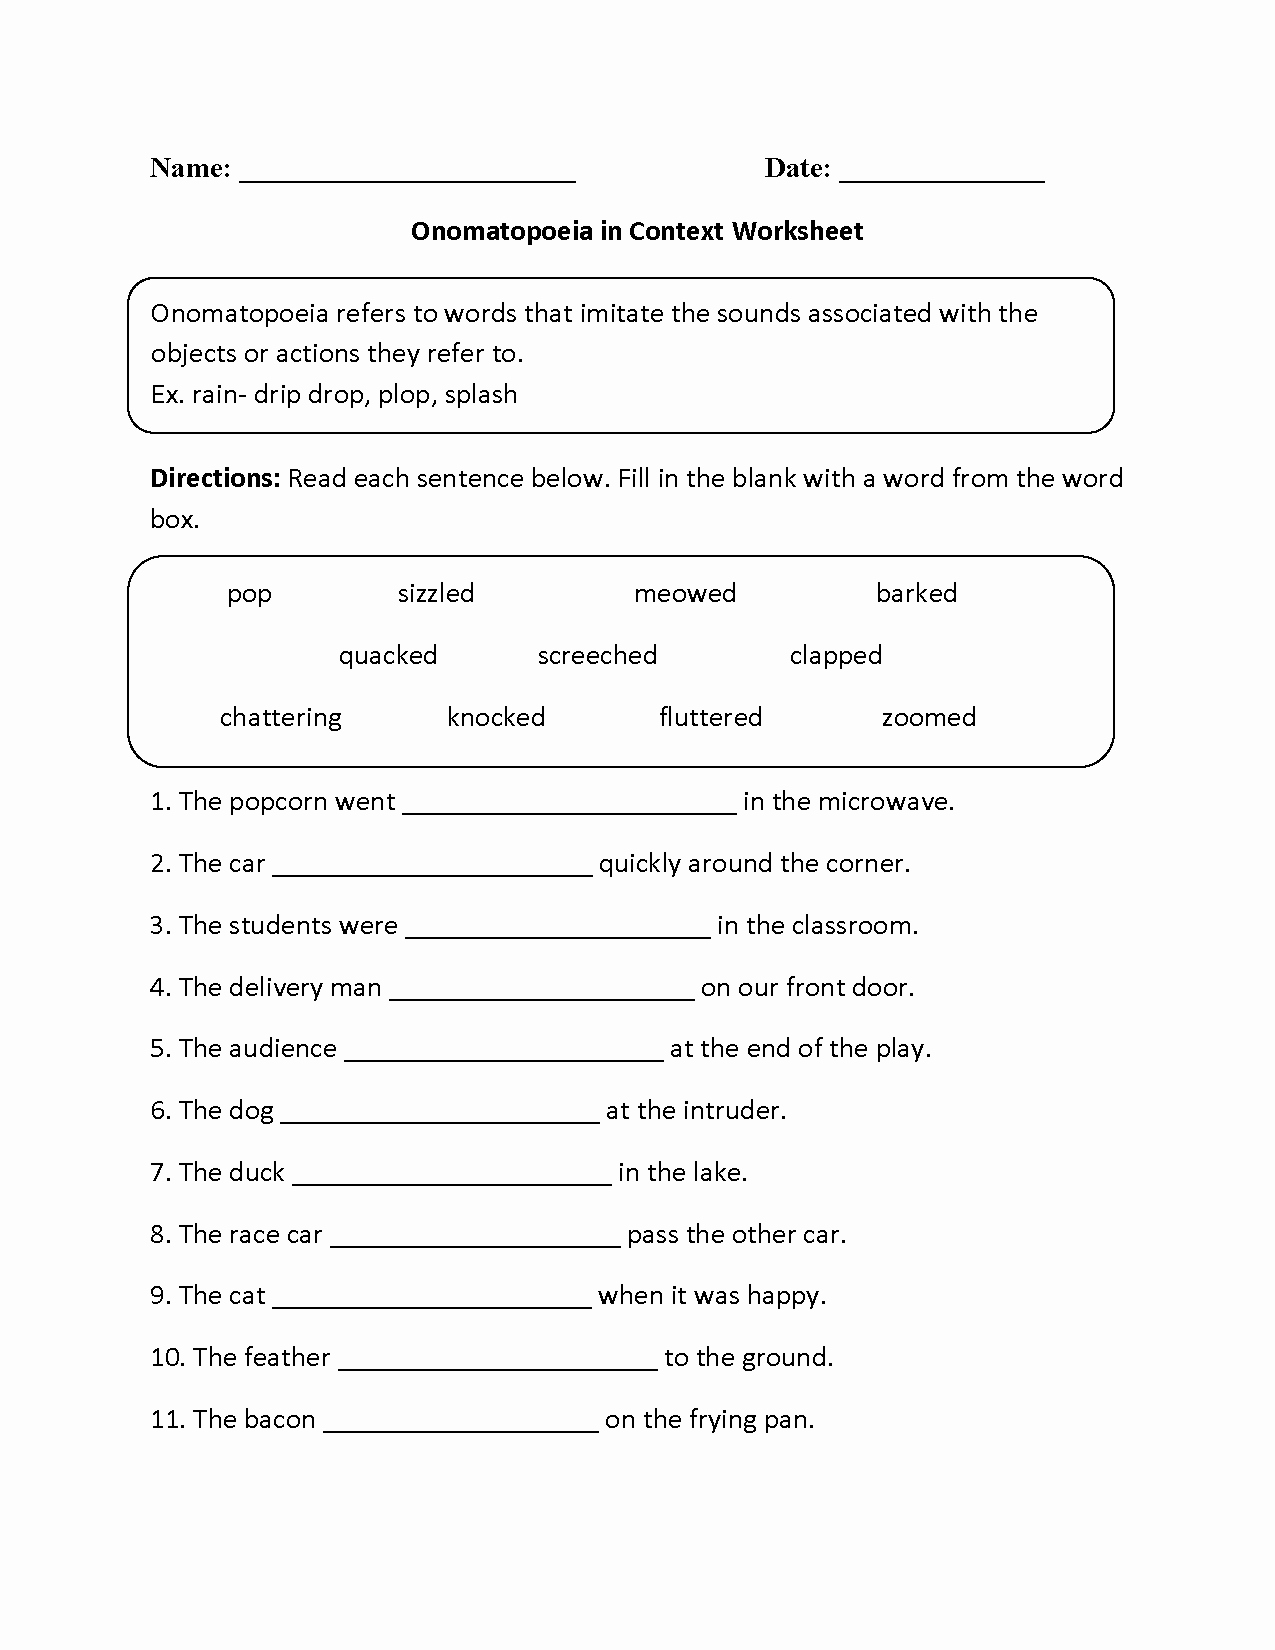 English Worksheet for Grade 2 Luxury Omatopoeia In Context Worksheet